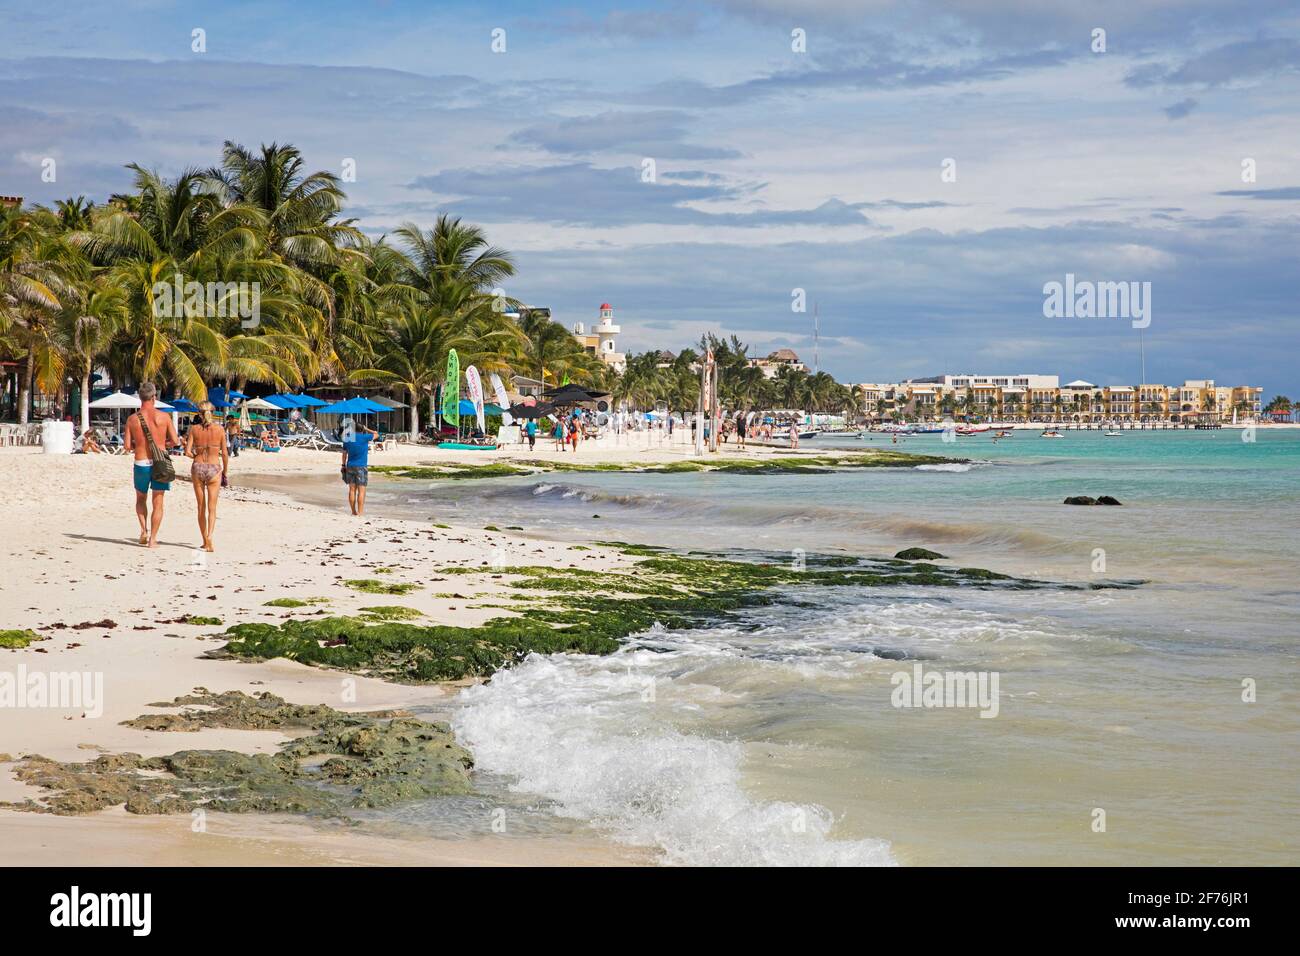 Touristes occidentaux marchant sur la plage de sable blanc et les hôtels le long de Playa Del Carmen, Riviera Maya, Solidaridad, Quintana Roo, Yucatán Peninsula, Mexique Banque D'Images